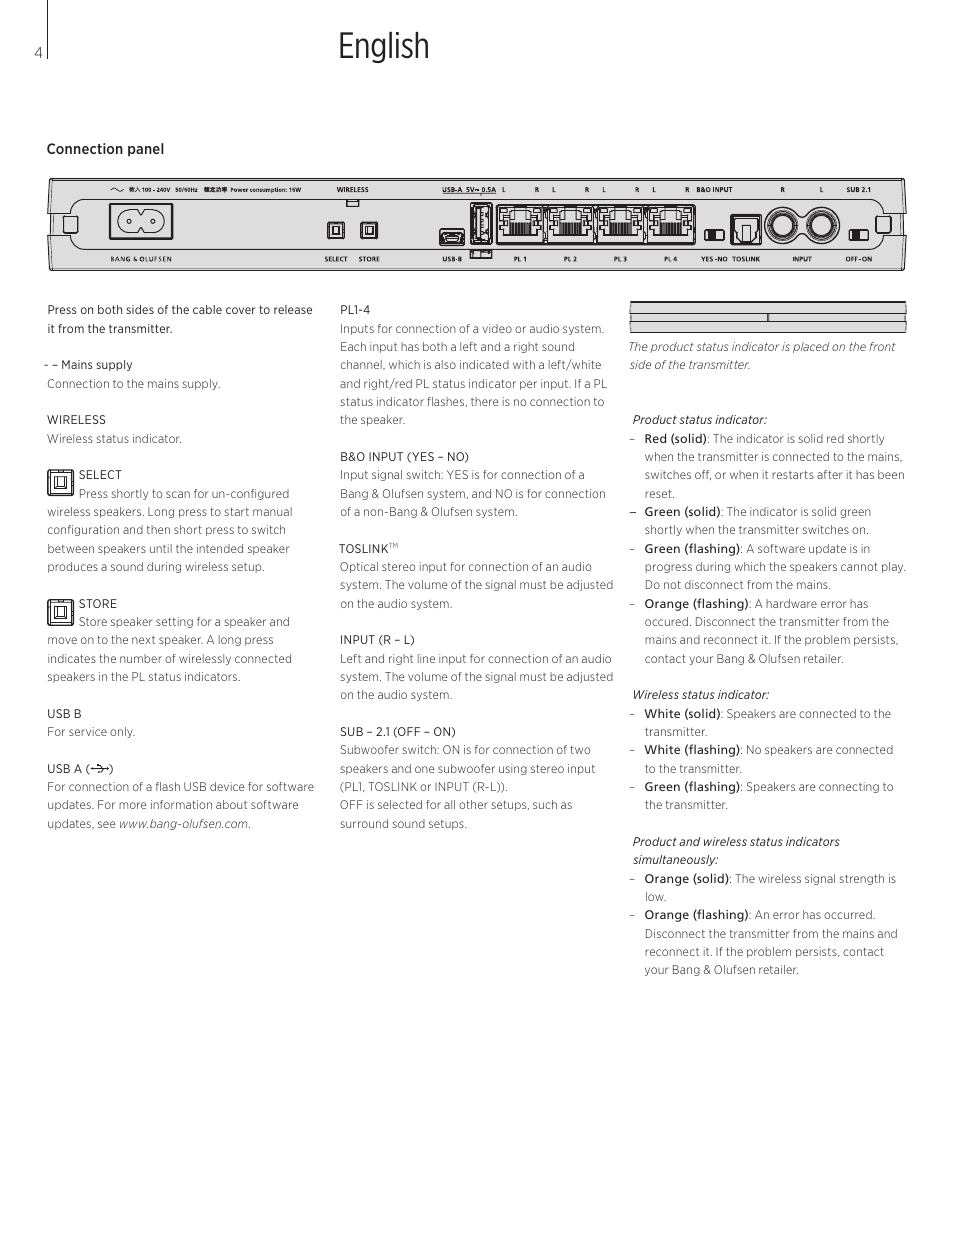 English | Bang & Olufsen BeoLab Transmitter 1 User Guide User Manual | Page 4 / 84